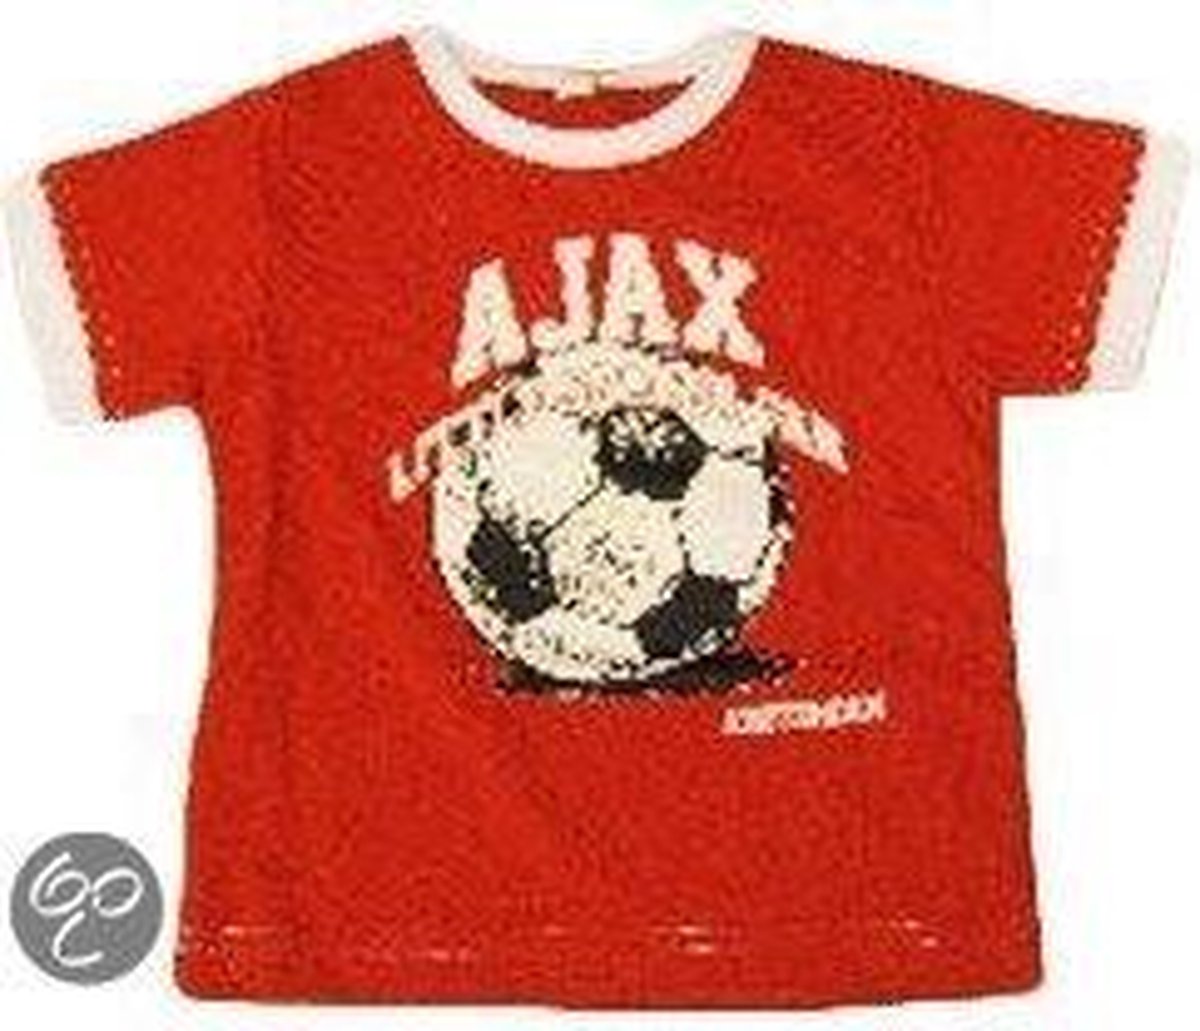 Ajax Thuisshirt Junior - Voetbalshirt - Kinderen - Maat 62/68 - Rood - AFC Ajax